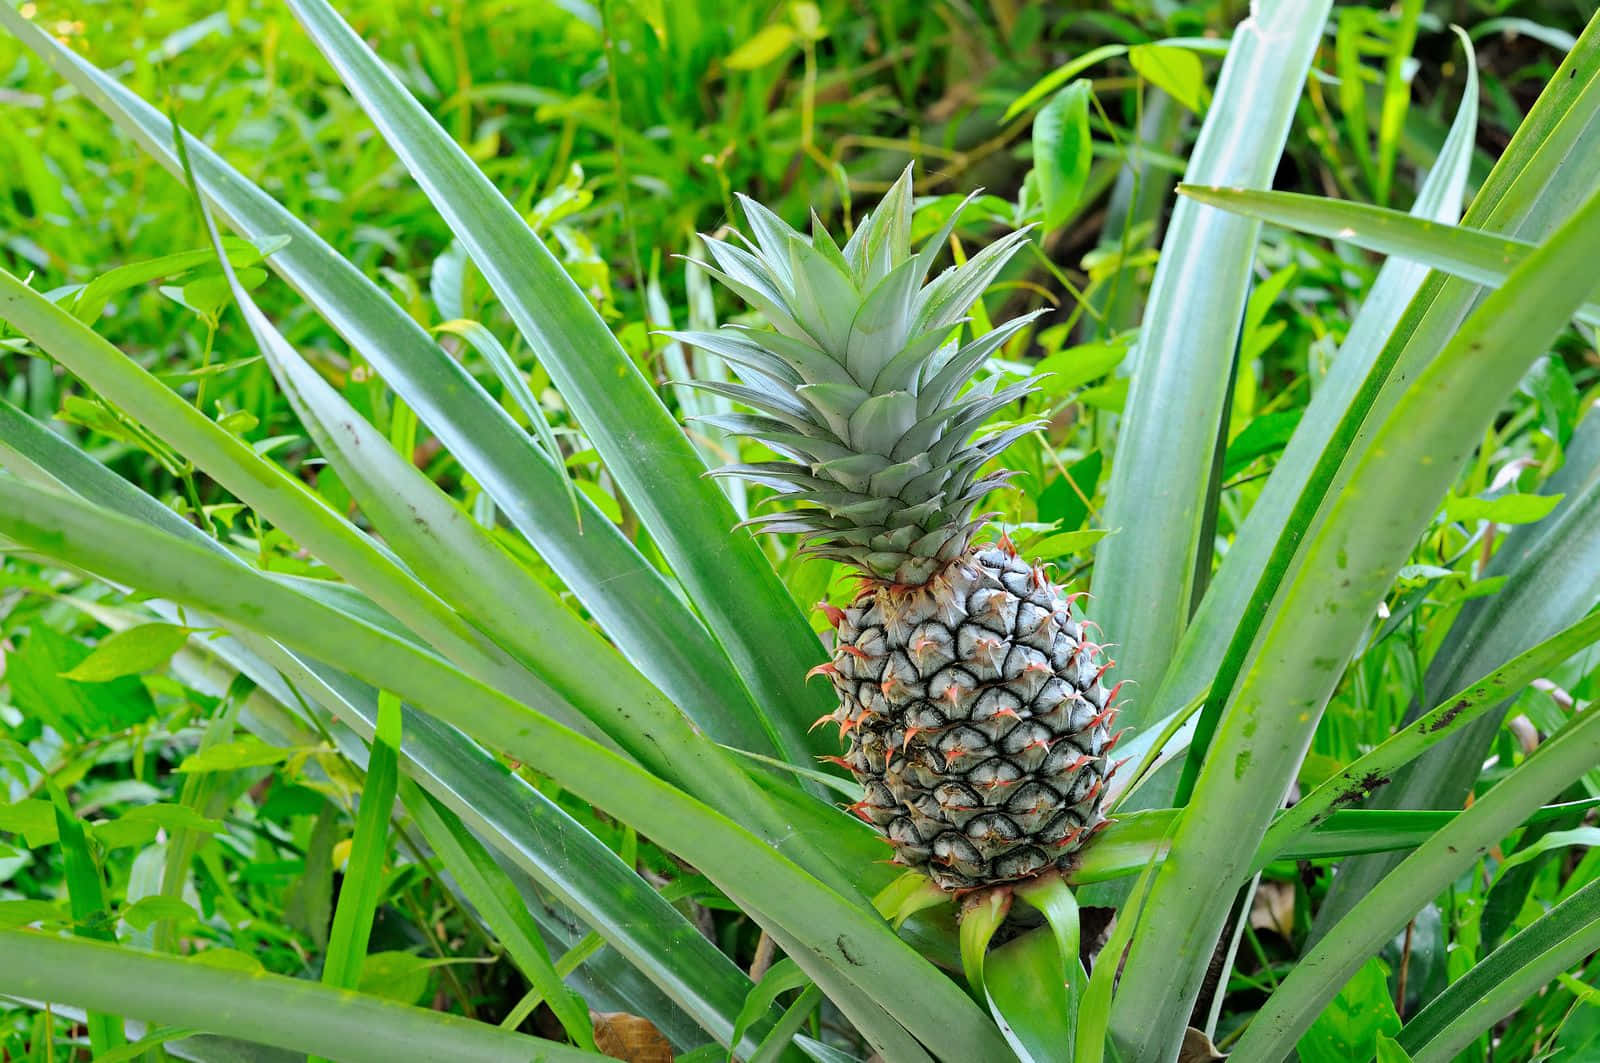 A ripe pineapple ready to enjoy!